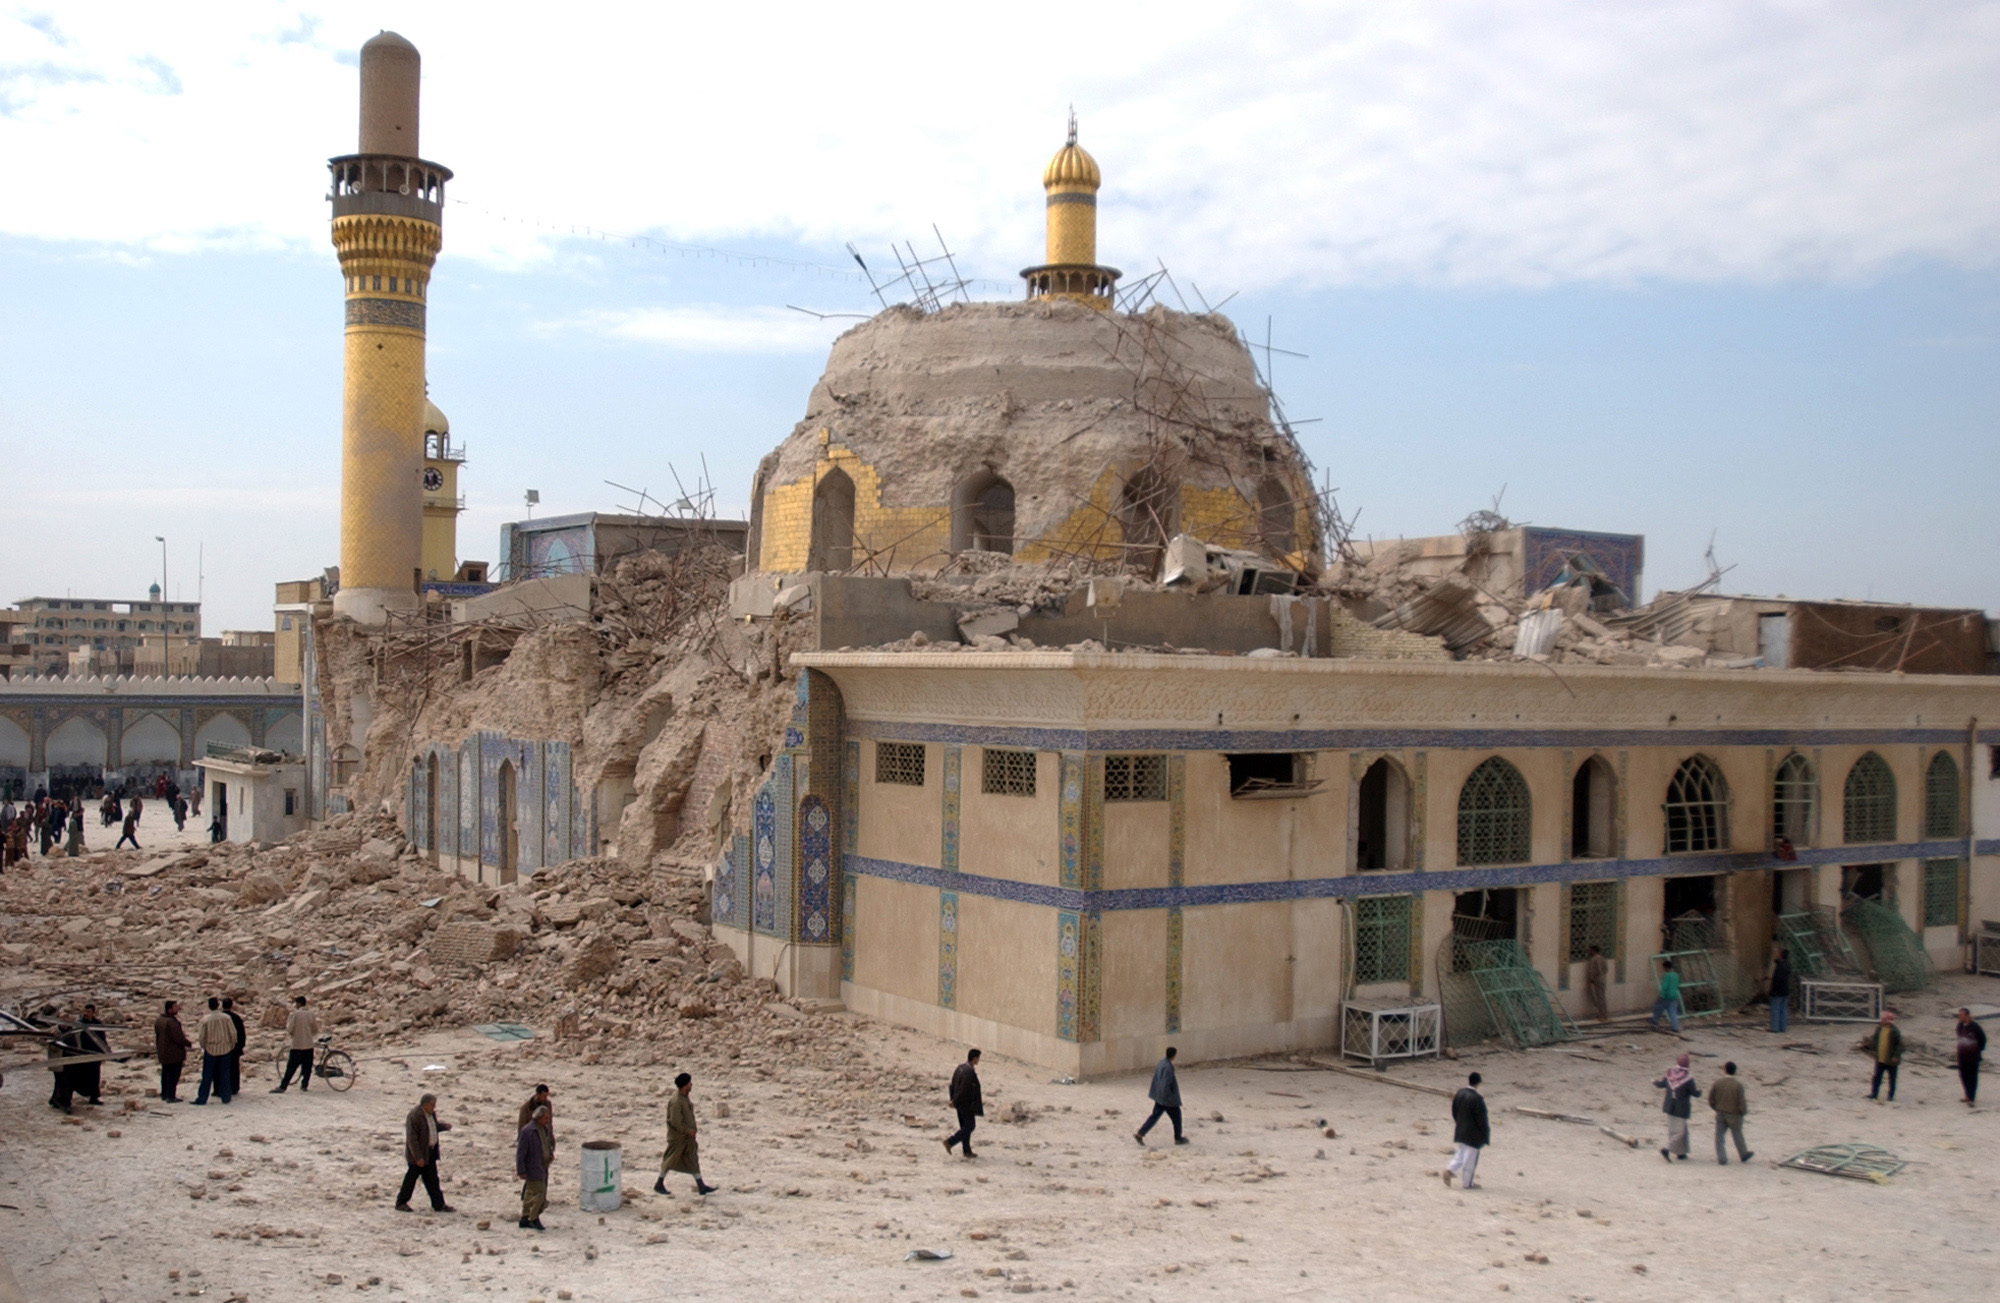 Iraqis walk past the damaged al-Askari mosque following an explosion in Samarra, 95 kilometers (60 miles) north of Baghdad, Iraq on Feb. 22, 2006. (Hameed Rasheed—AP)